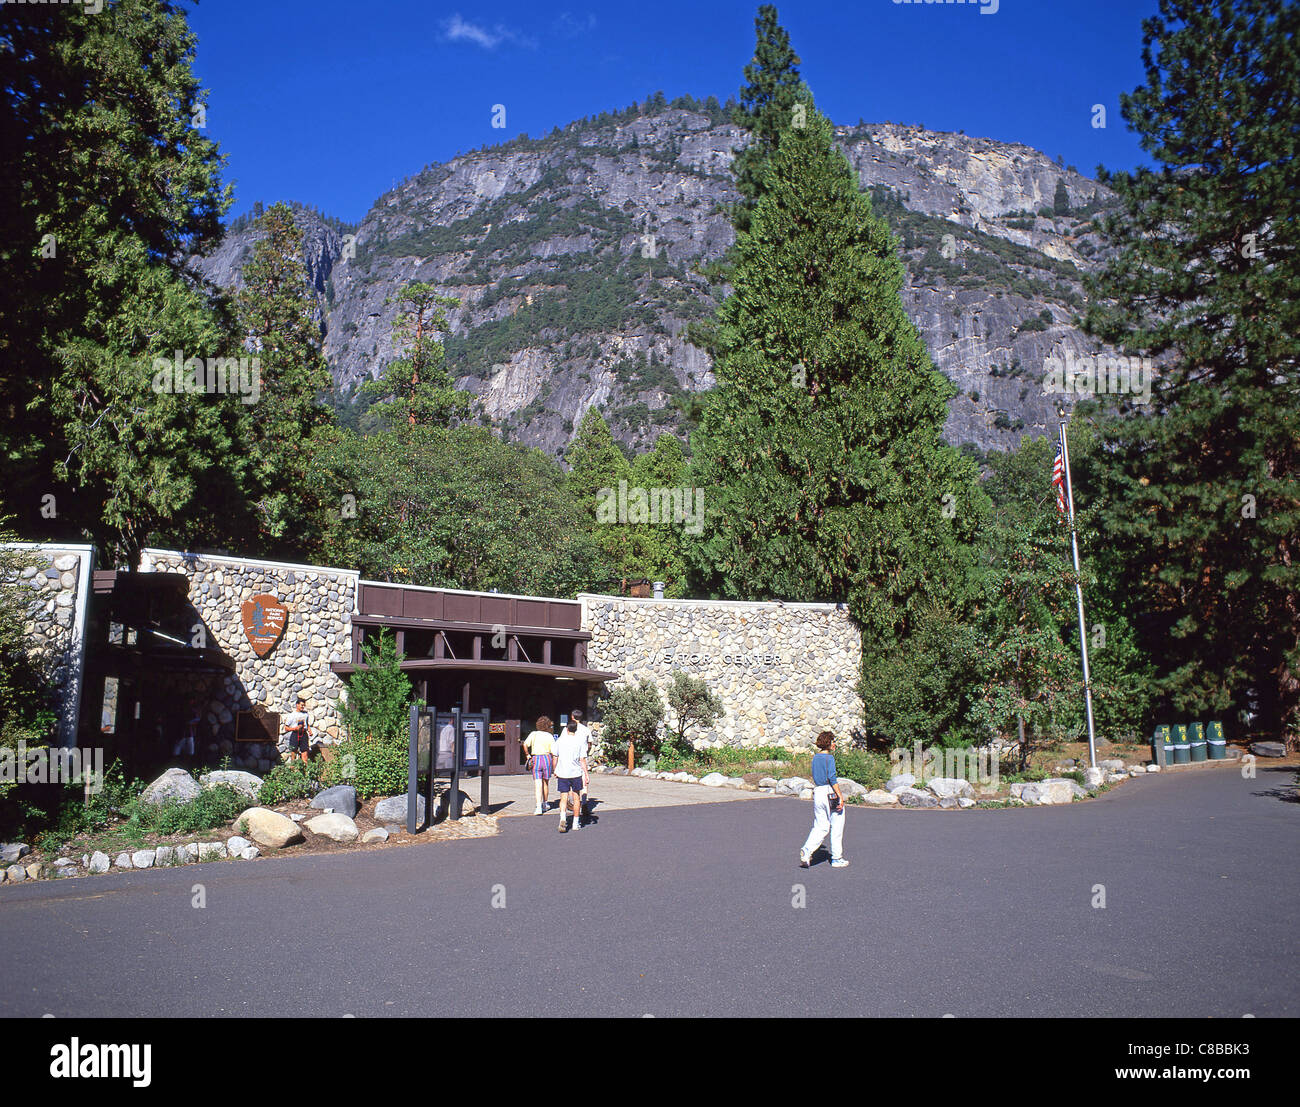 National Park Service Centre, Yosemite National Park, California, United States of America Stock Photo